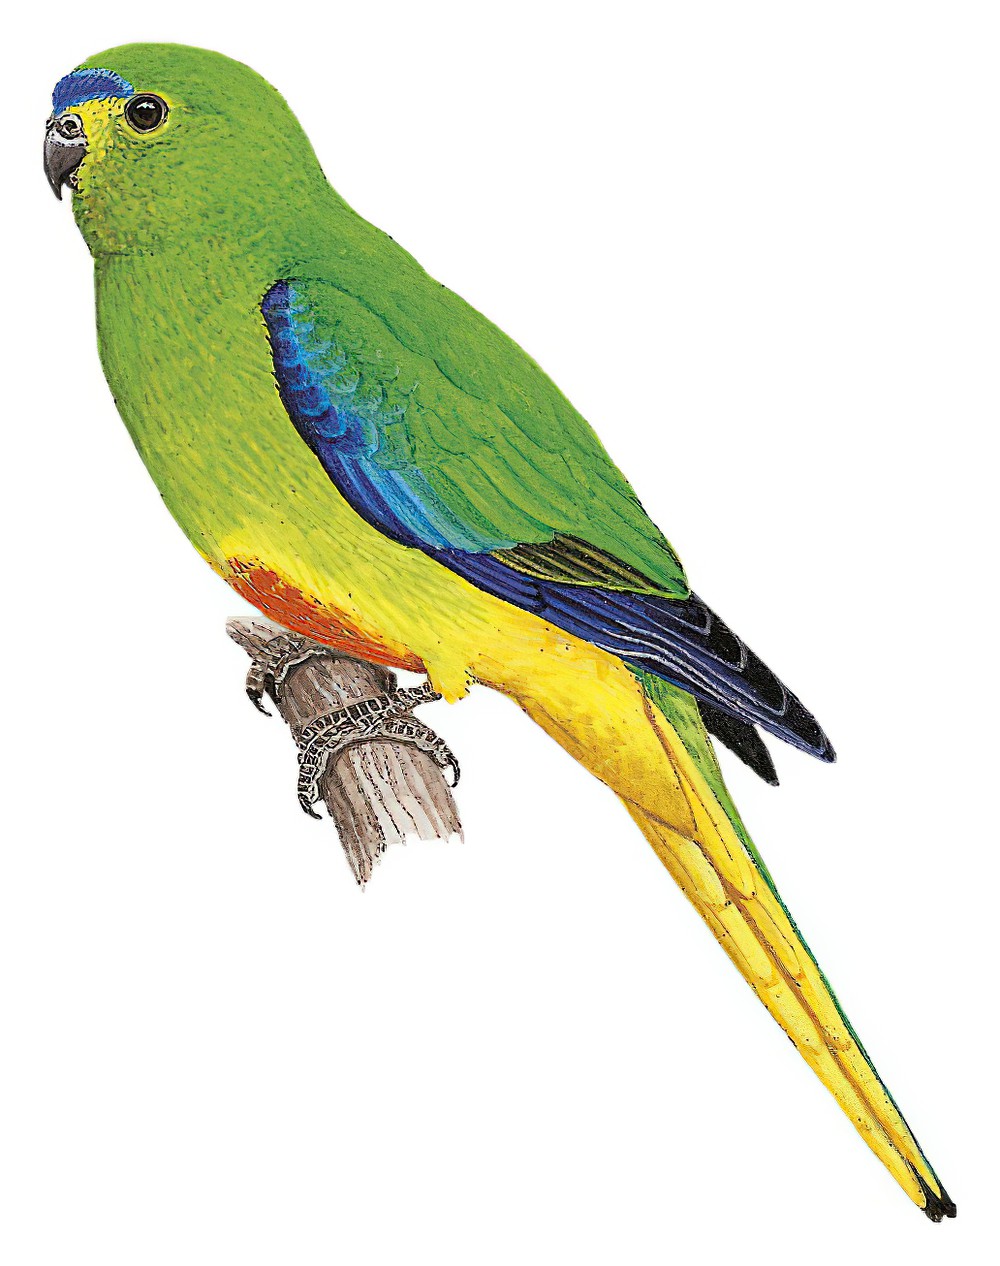 Orange-bellied Parrot / Neophema chrysogaster